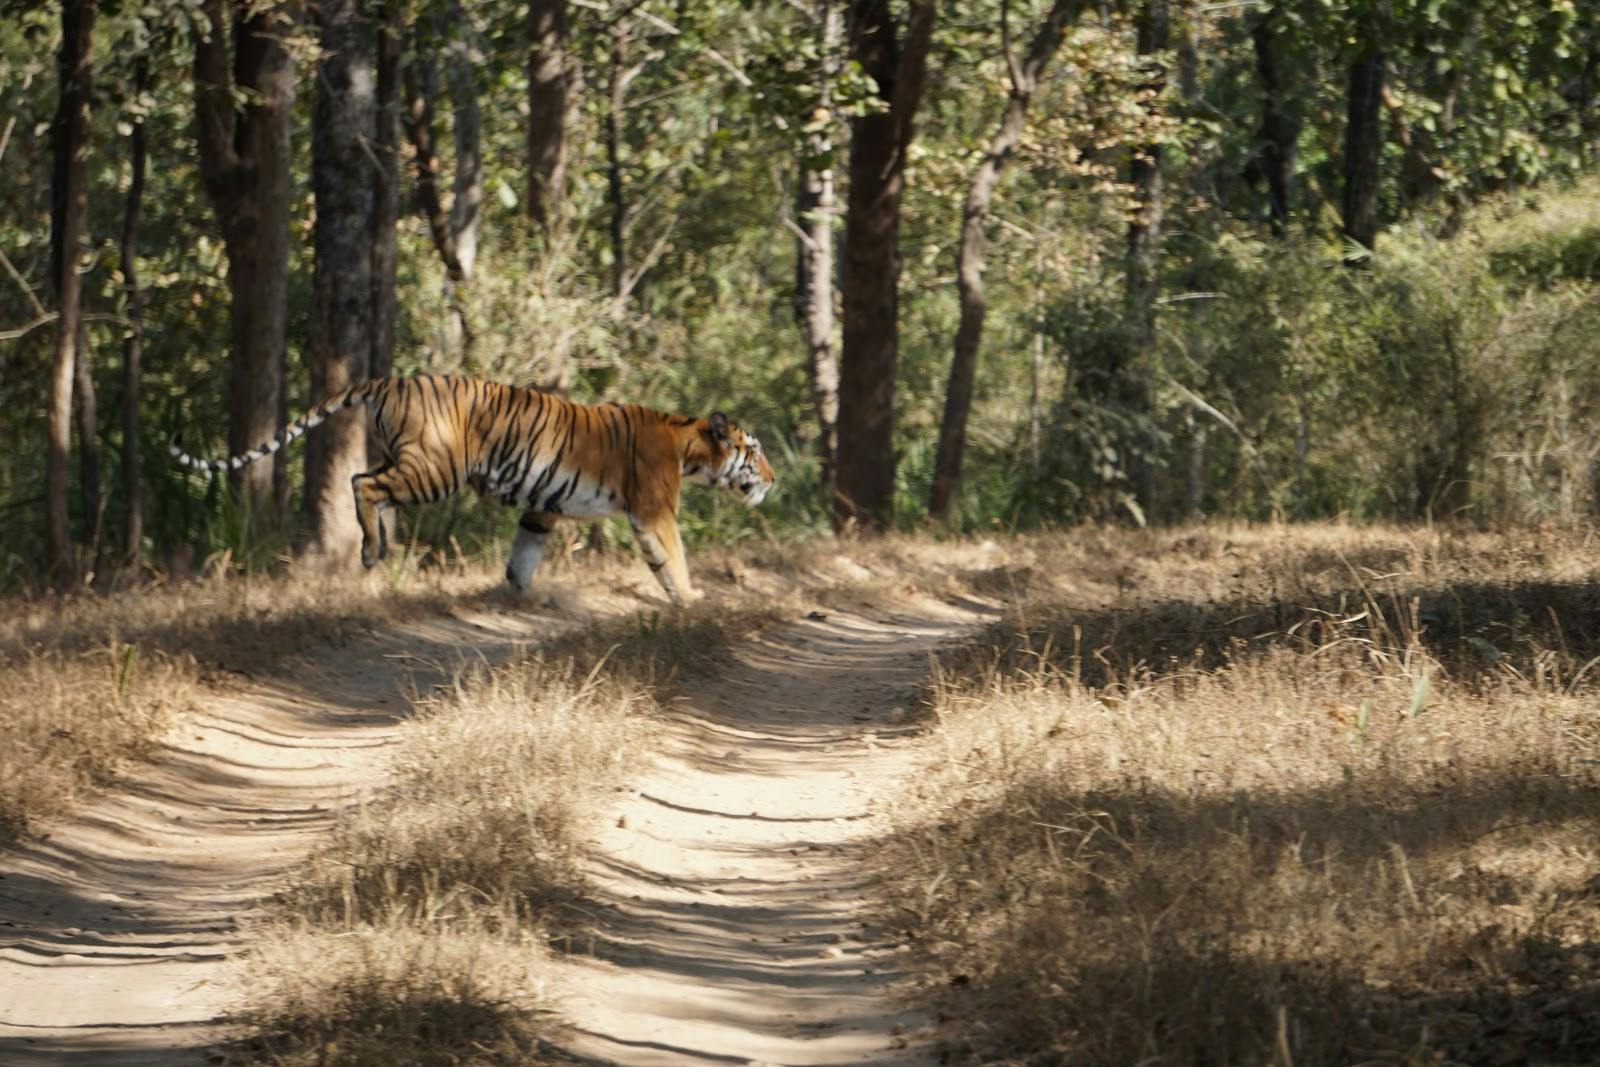 Image - Kanha Tiger Reserve